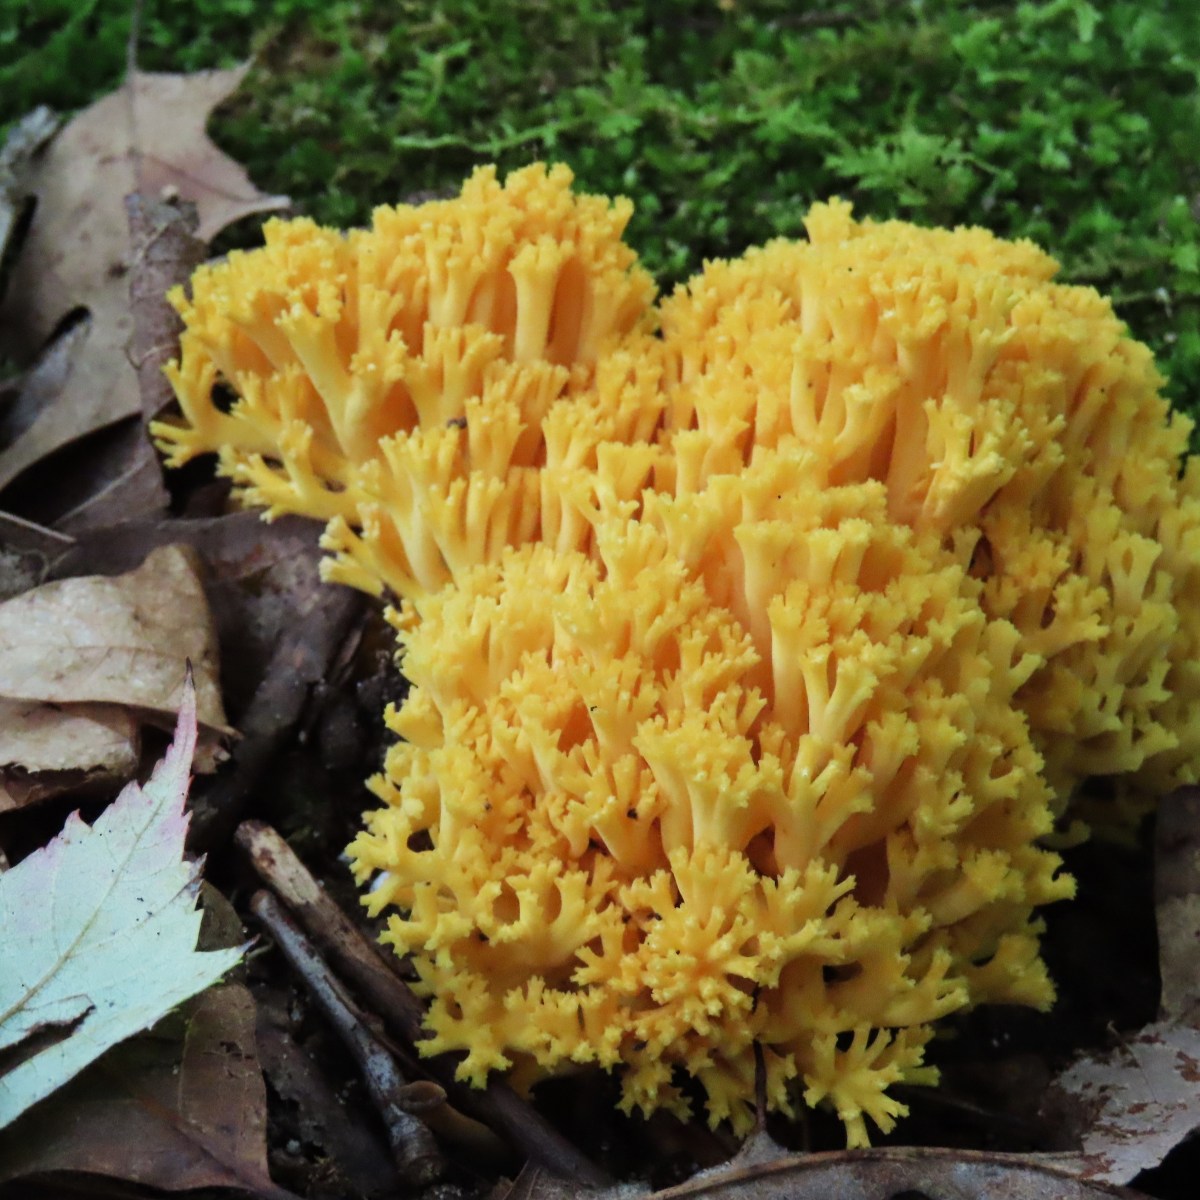 Golden Coral Fungi